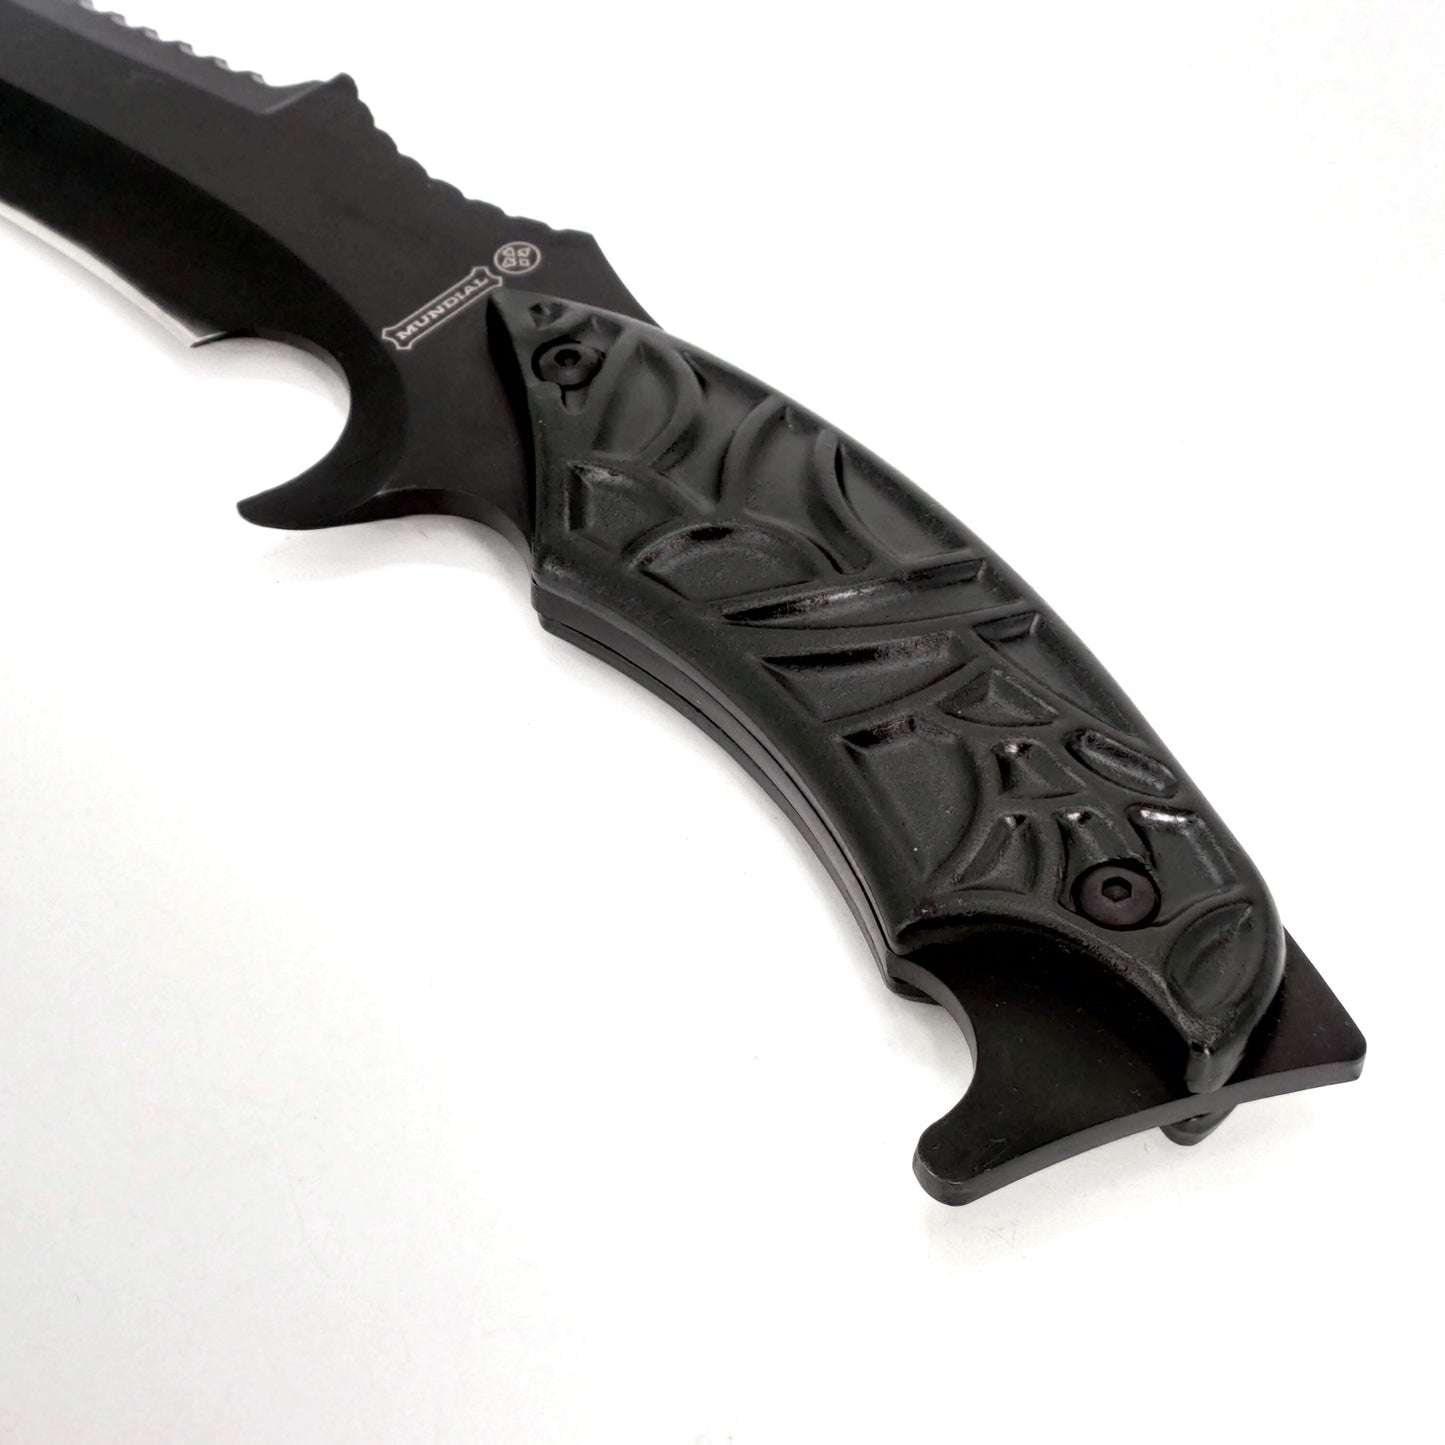 MUNDIAL BLACK FIXED BLADE KNIFE